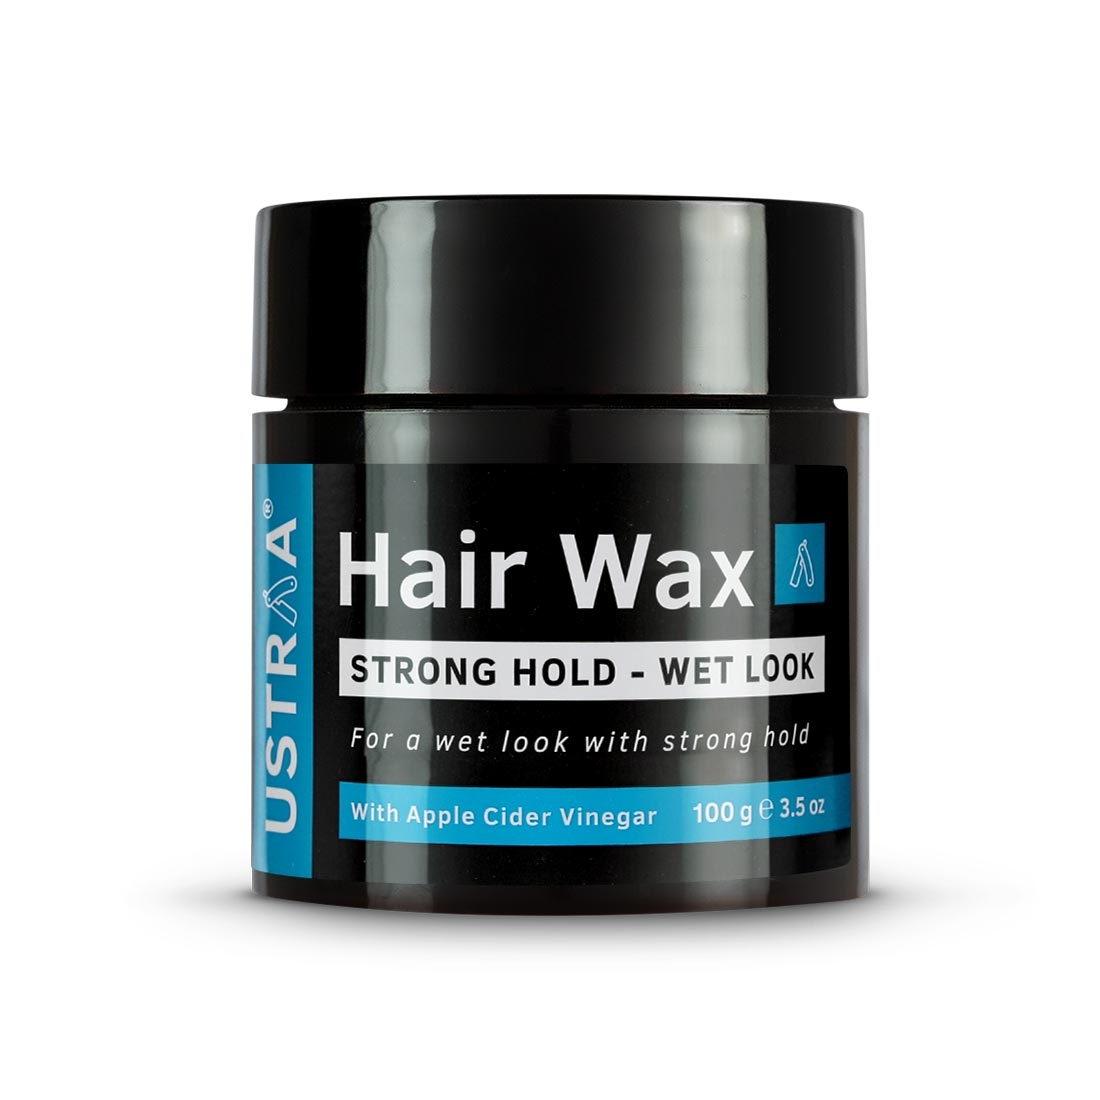 Ustraa | Hair Wax - Strong Hold - Wet Look 100g